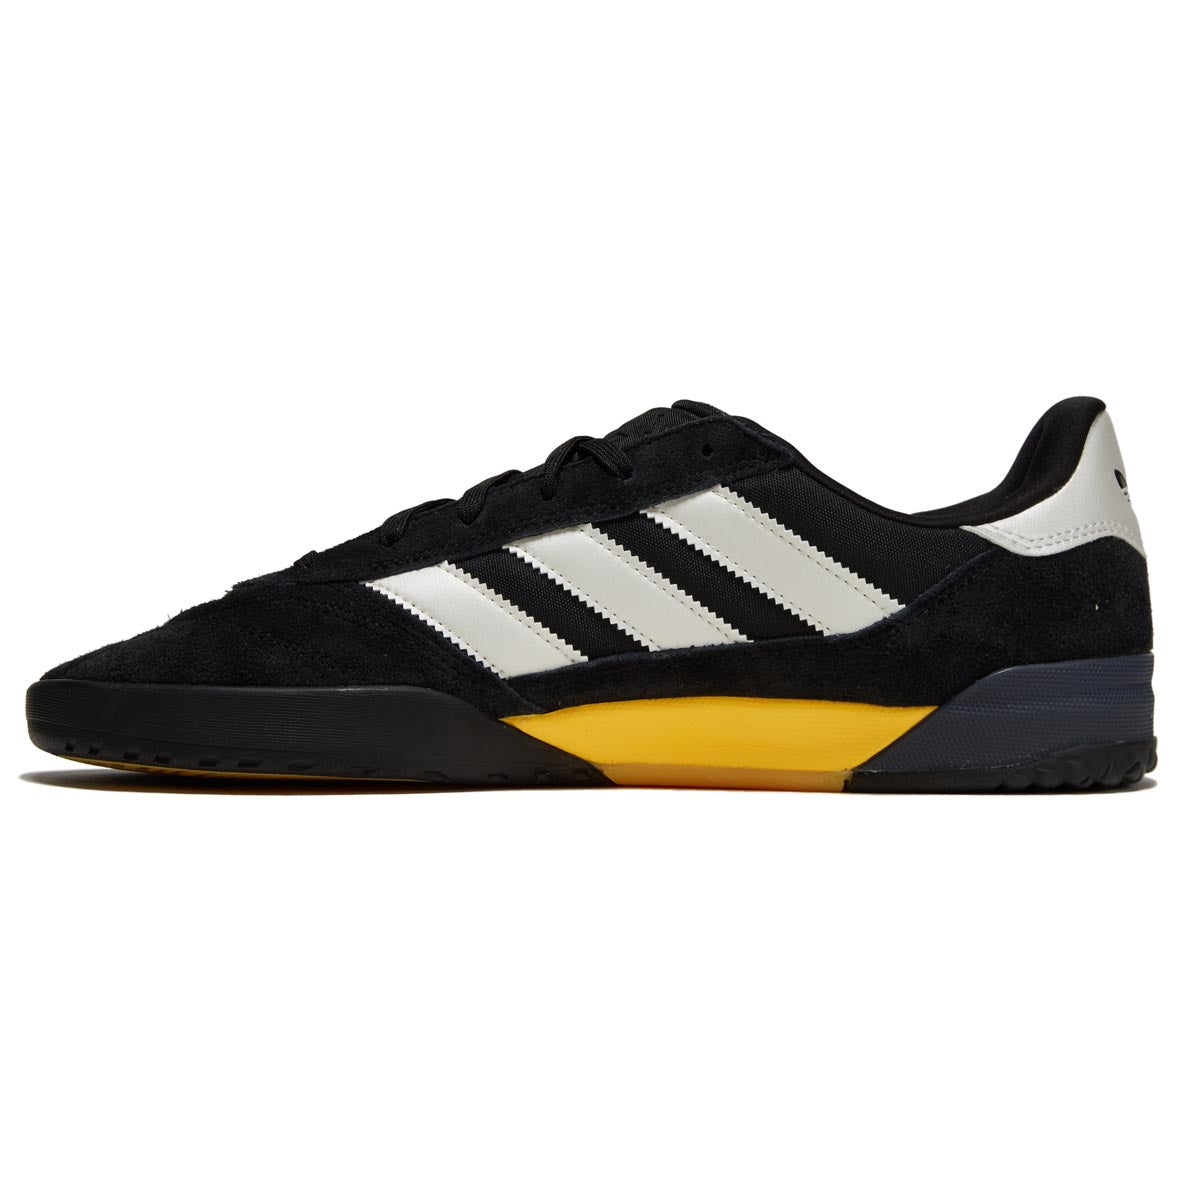 Adidas Copa Premiere Shoes - Black/Metallic/Spark image 2